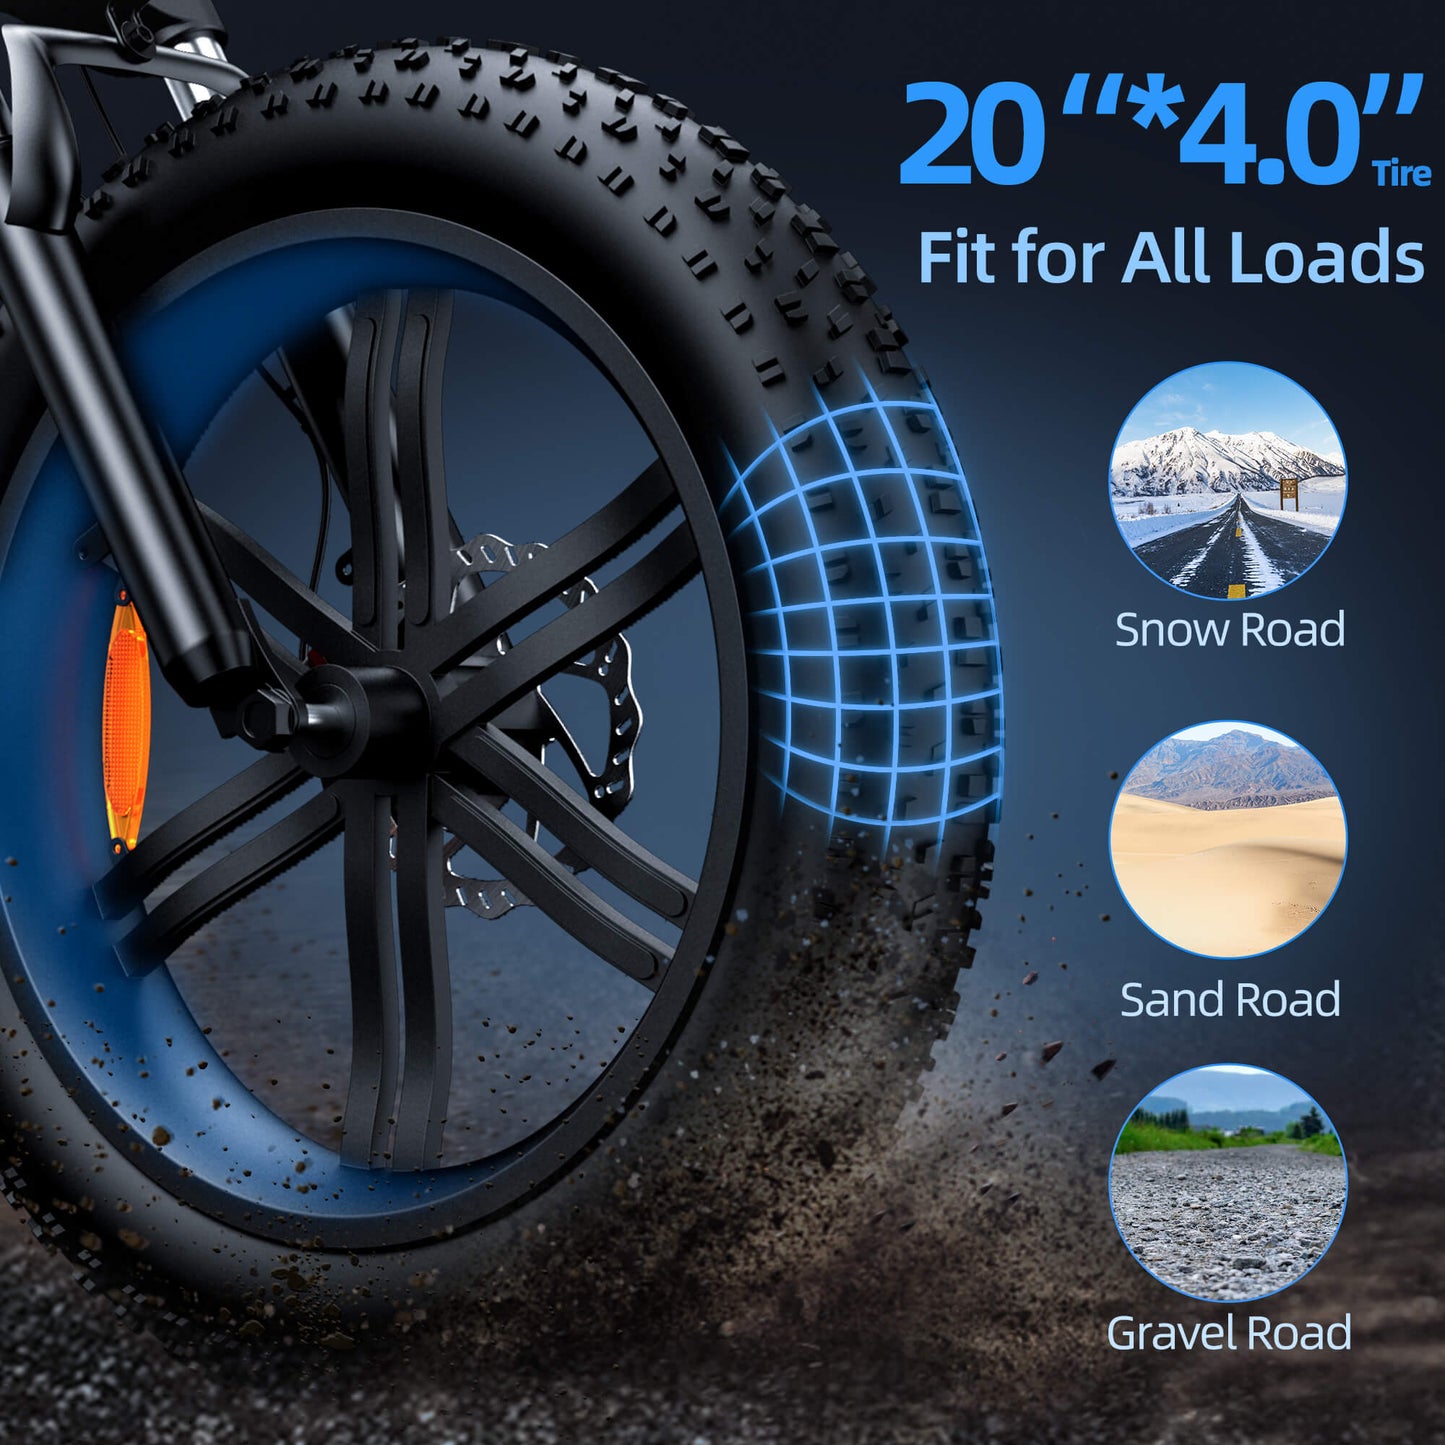 ADO A20F+ Faltbares E-Bike mit fetten Reifen ohne Gas (EU-Version)